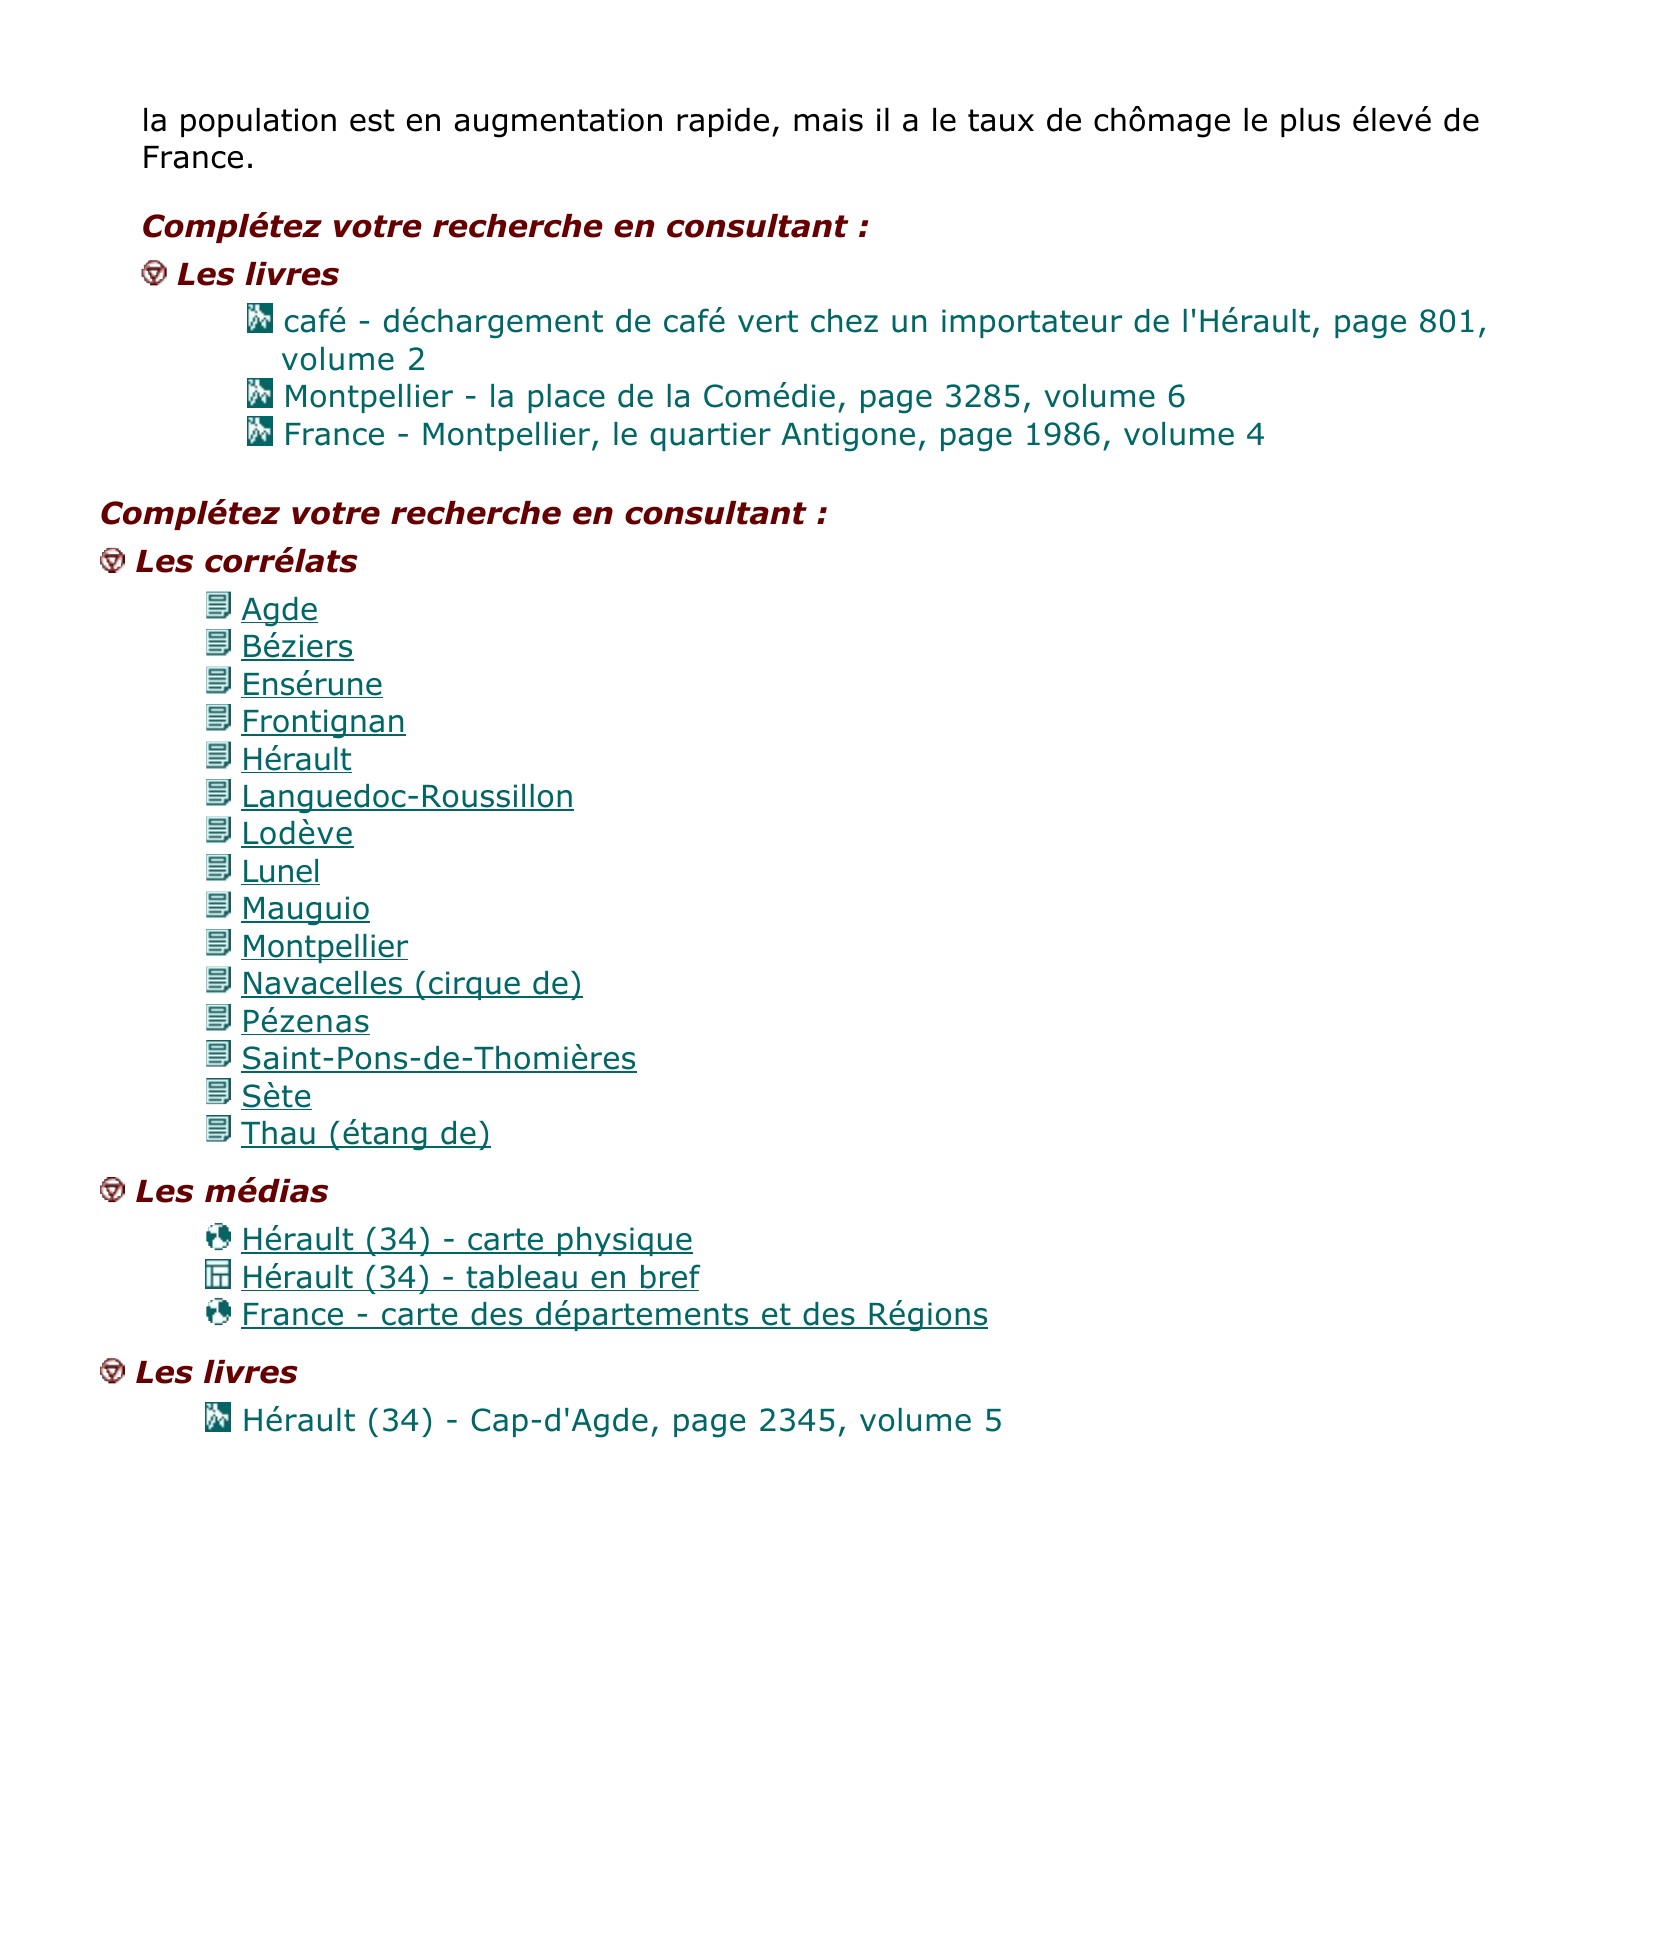 Prévisualisation du document Hérault (34).